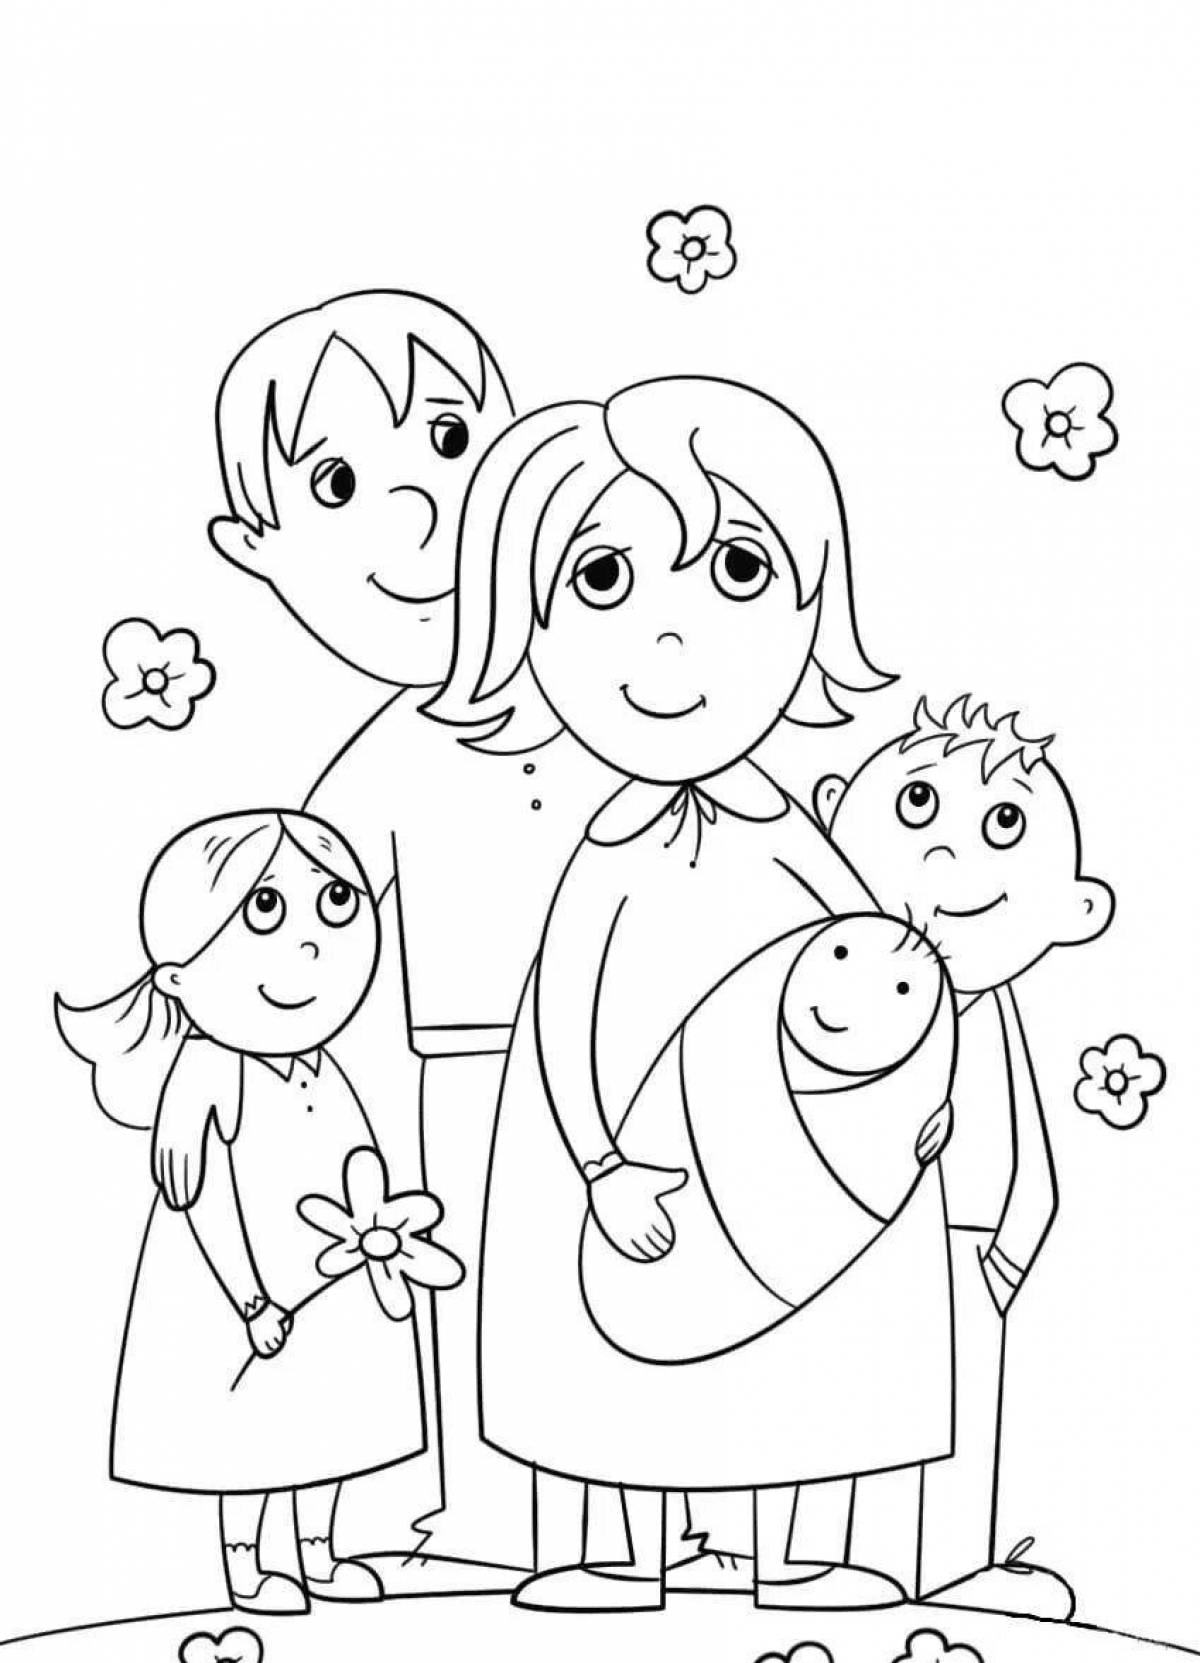 Сказочная страница раскраски моя семья